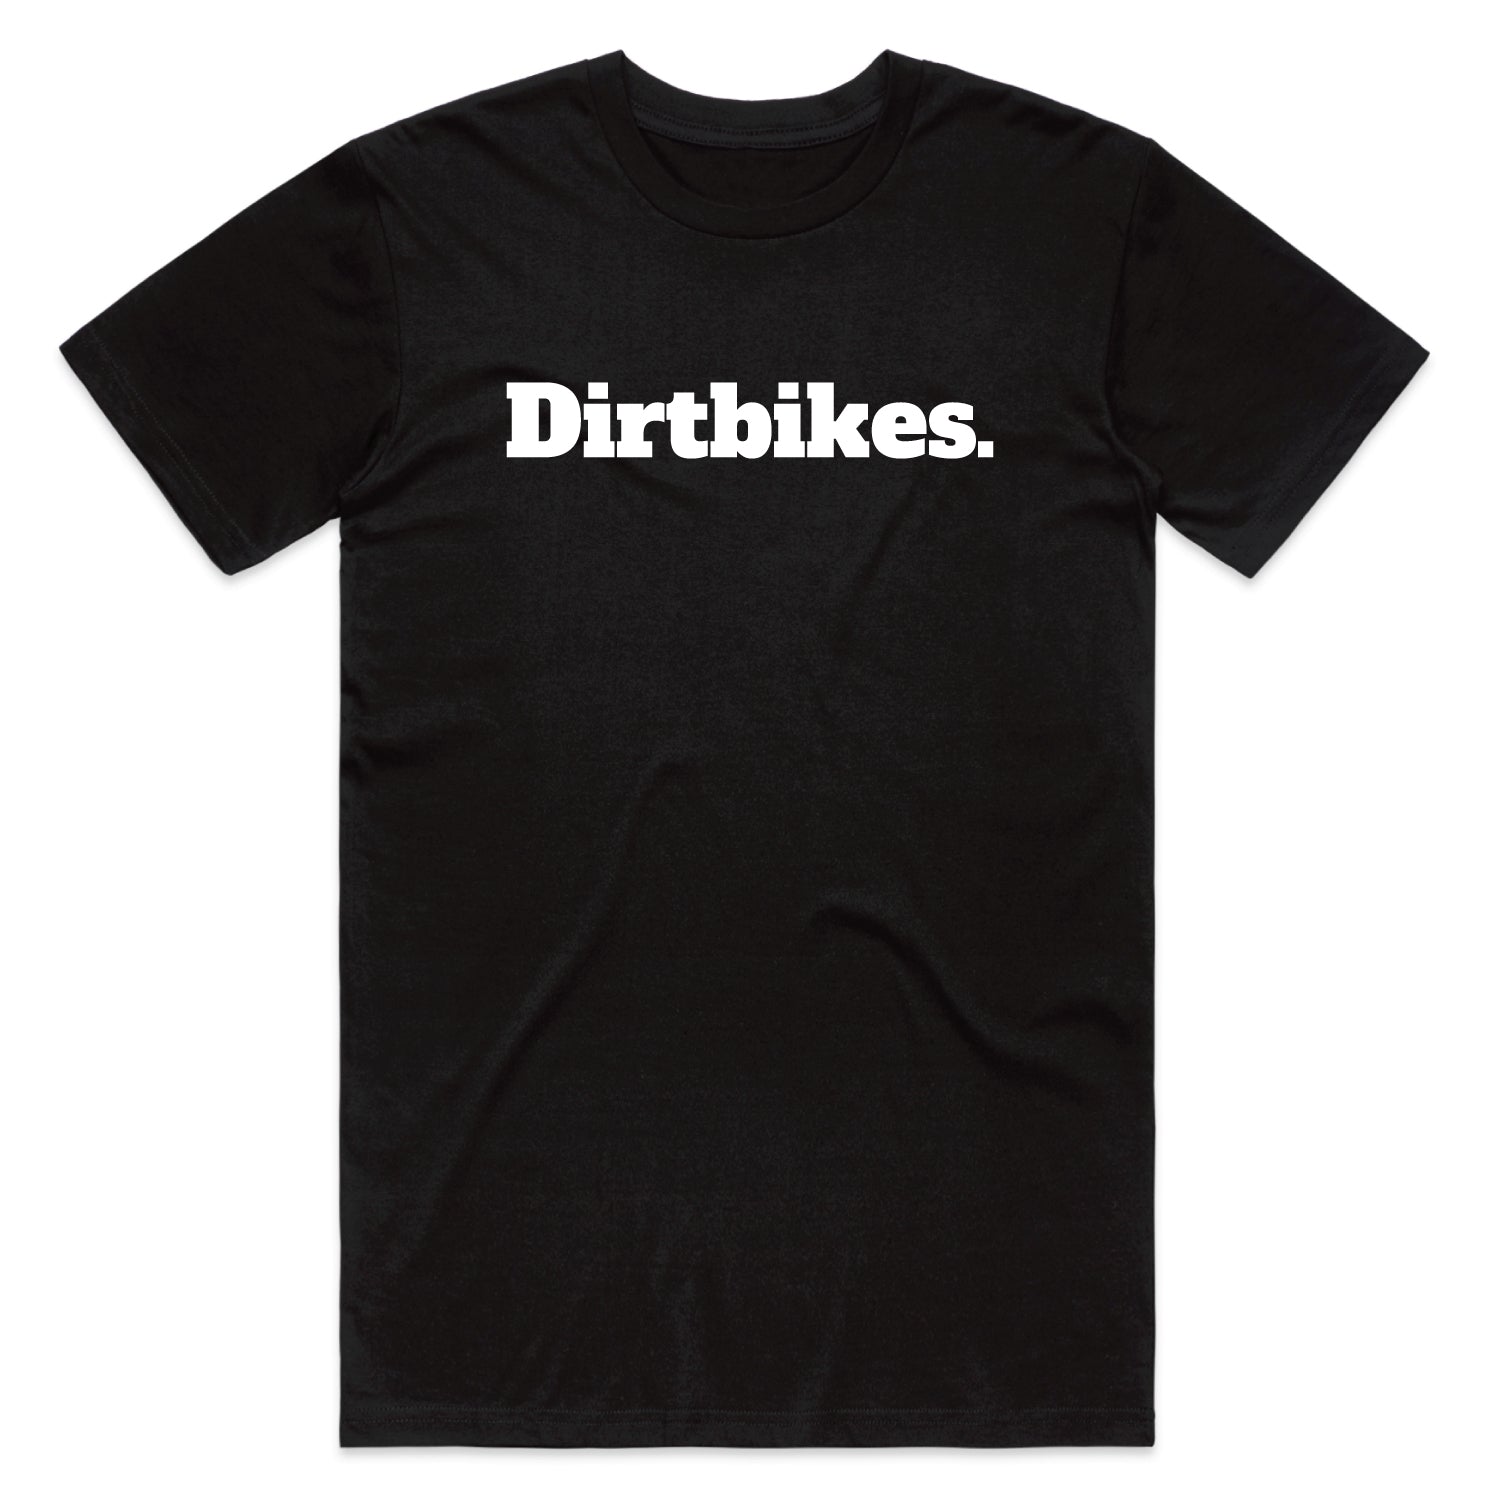 Black Dirtbikes. T-shirt